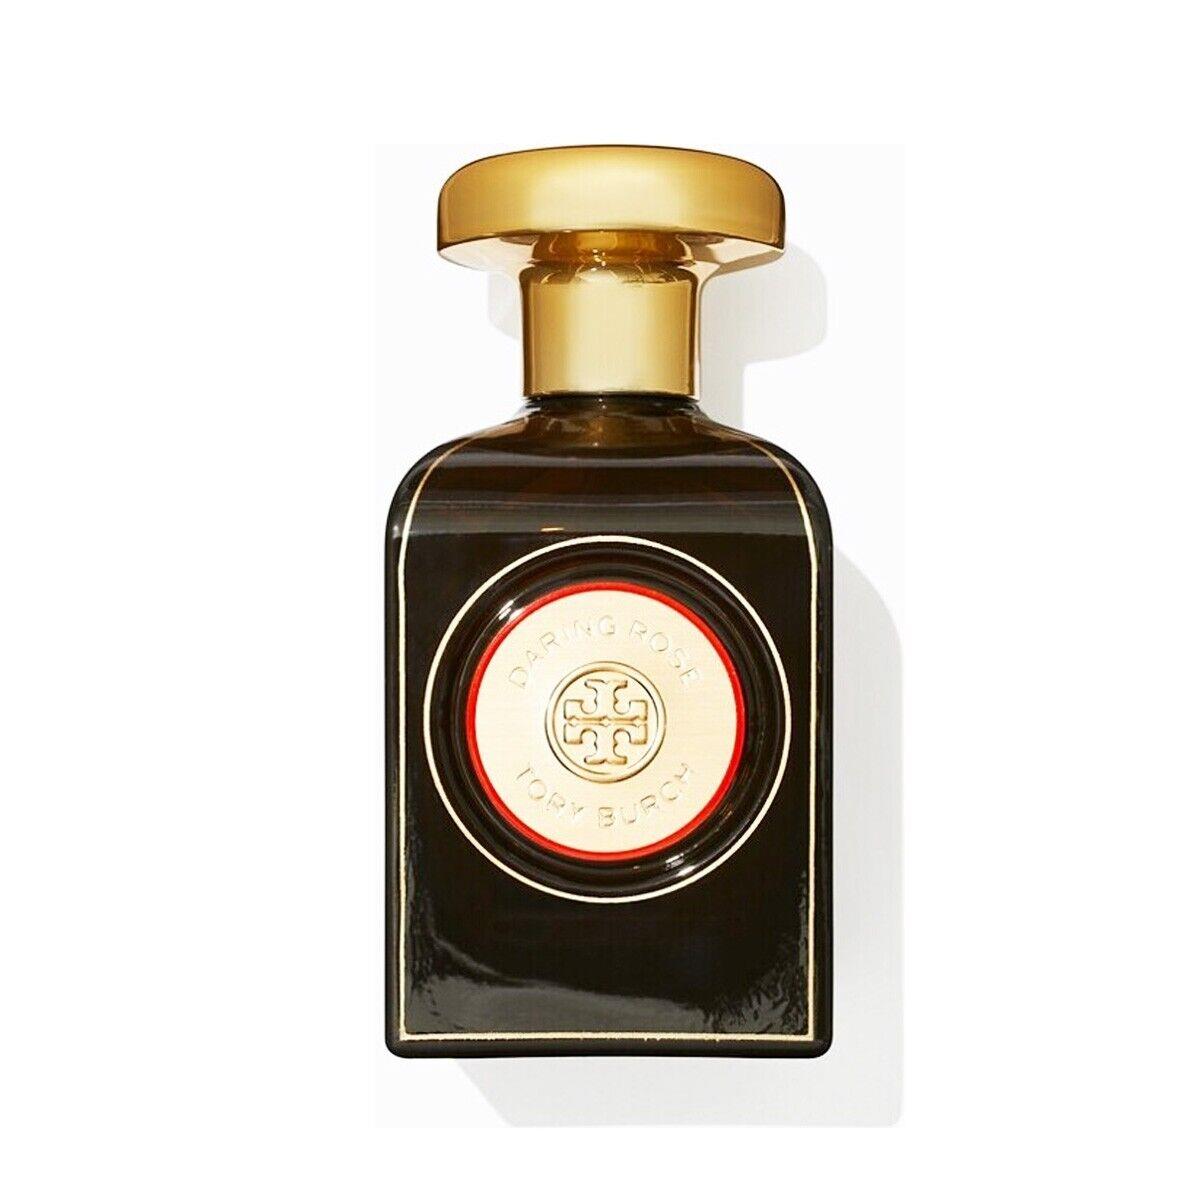 Tory Burch Daring Rose Eau De Parfum Spray - Full Size 3.0 Oz. / 90mL